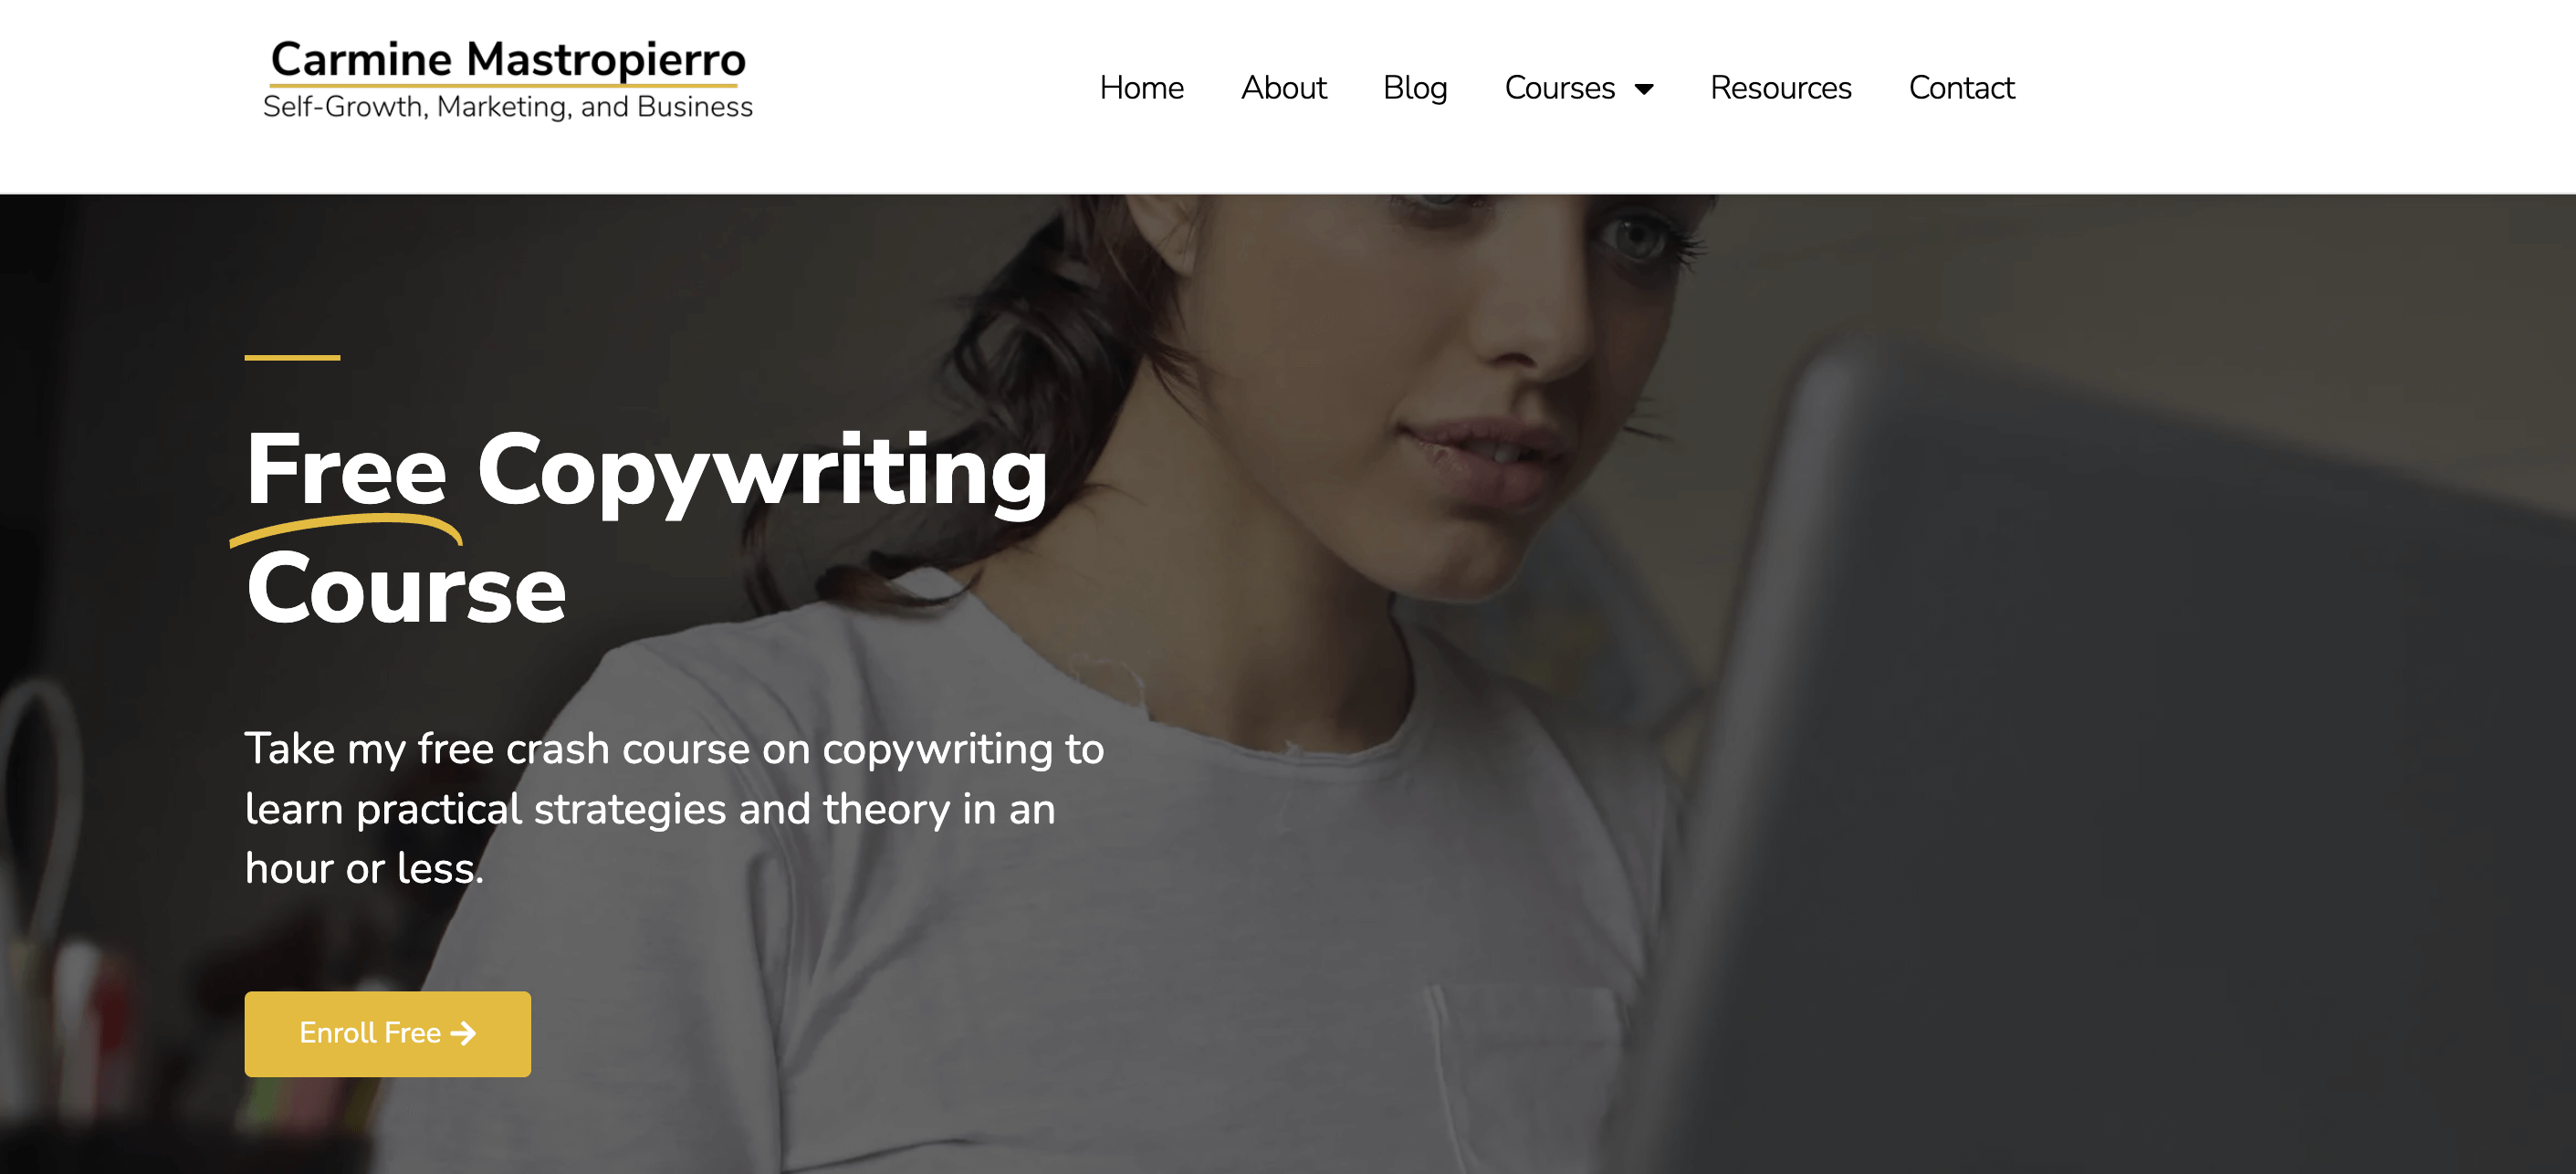 Free copywriting course landing page